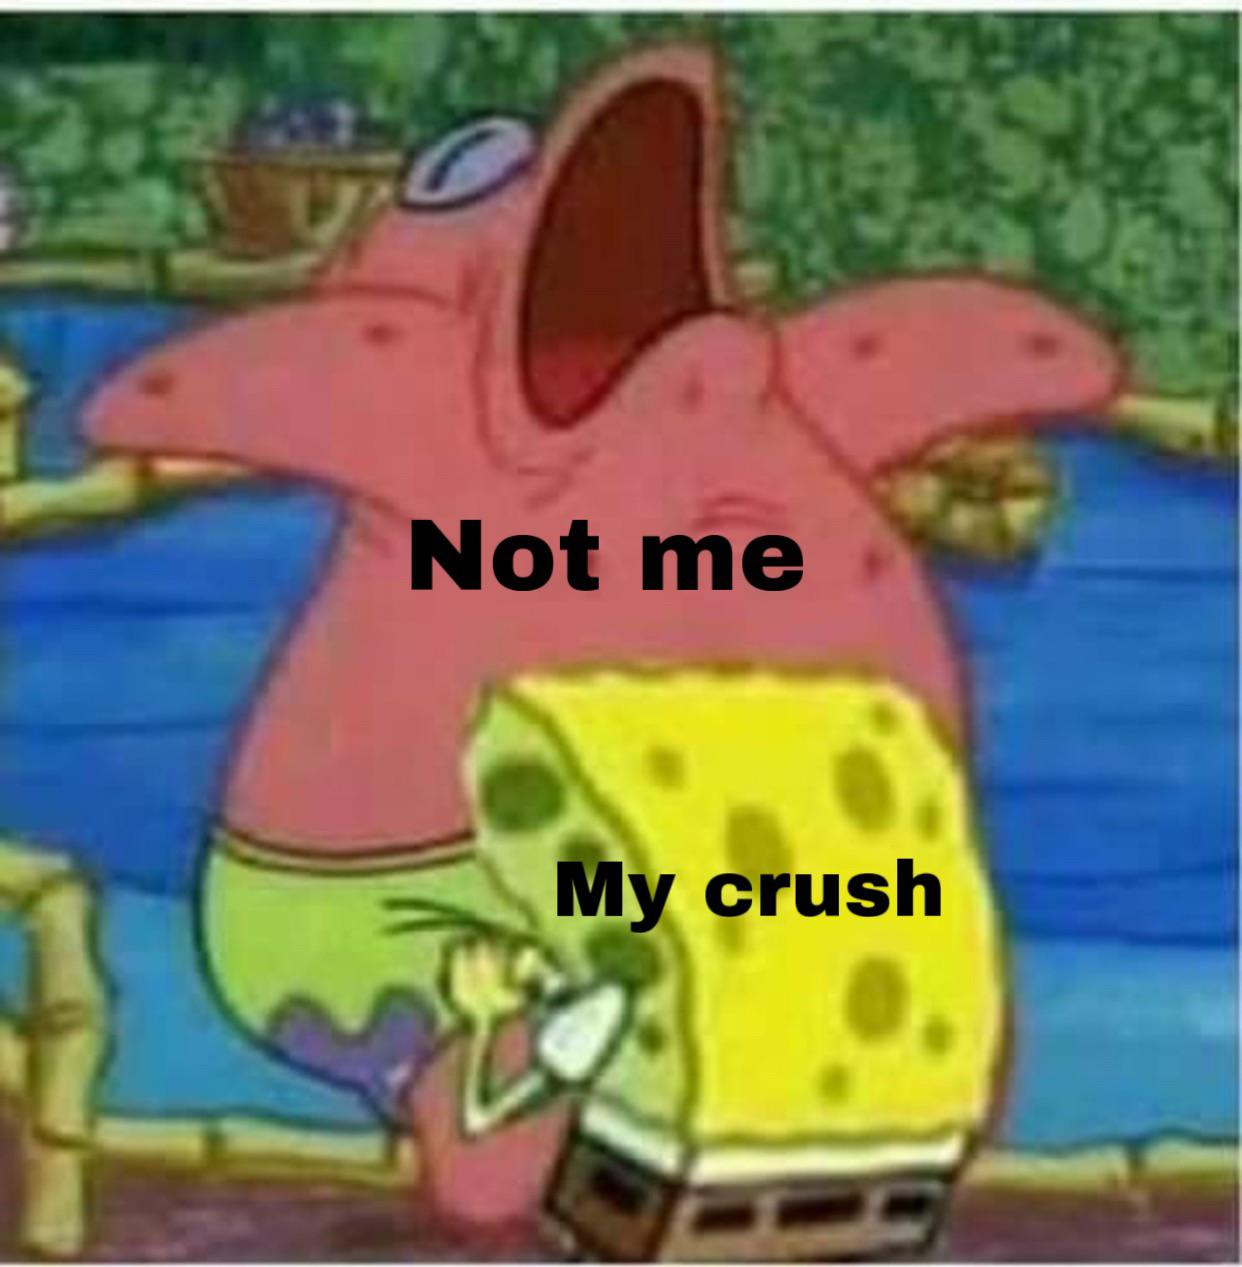 e minor spongebob meme - Not me My crush